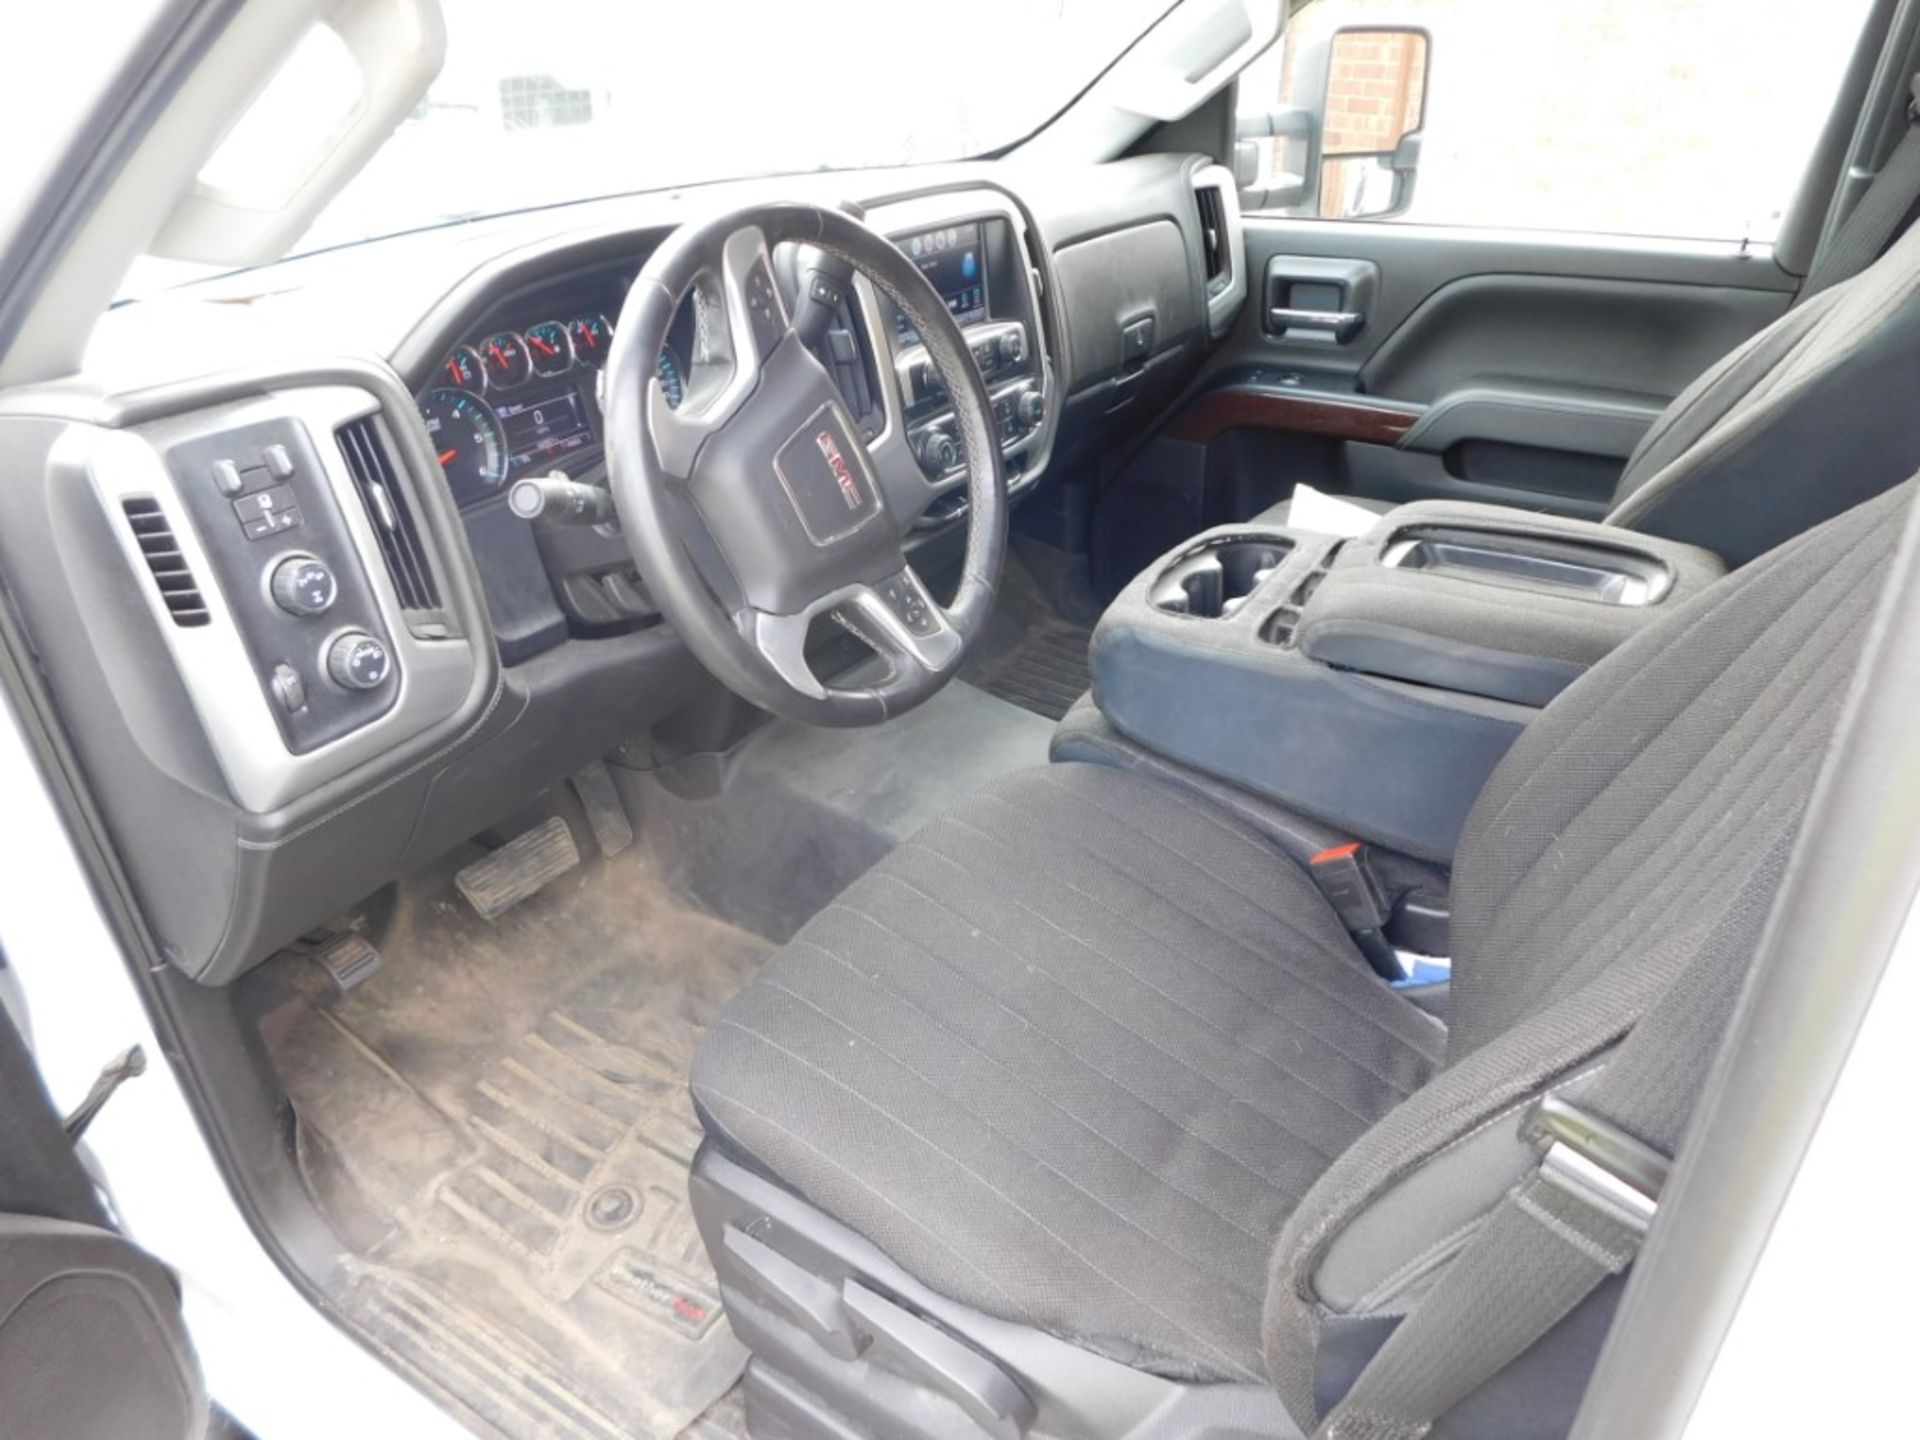 2018 GMC 2500 HD Pickup, VIN 1GT02SEG6JZ269242, 4 x 4, Automatic, Regular Cab, Cruise Control, AM/ - Image 18 of 30